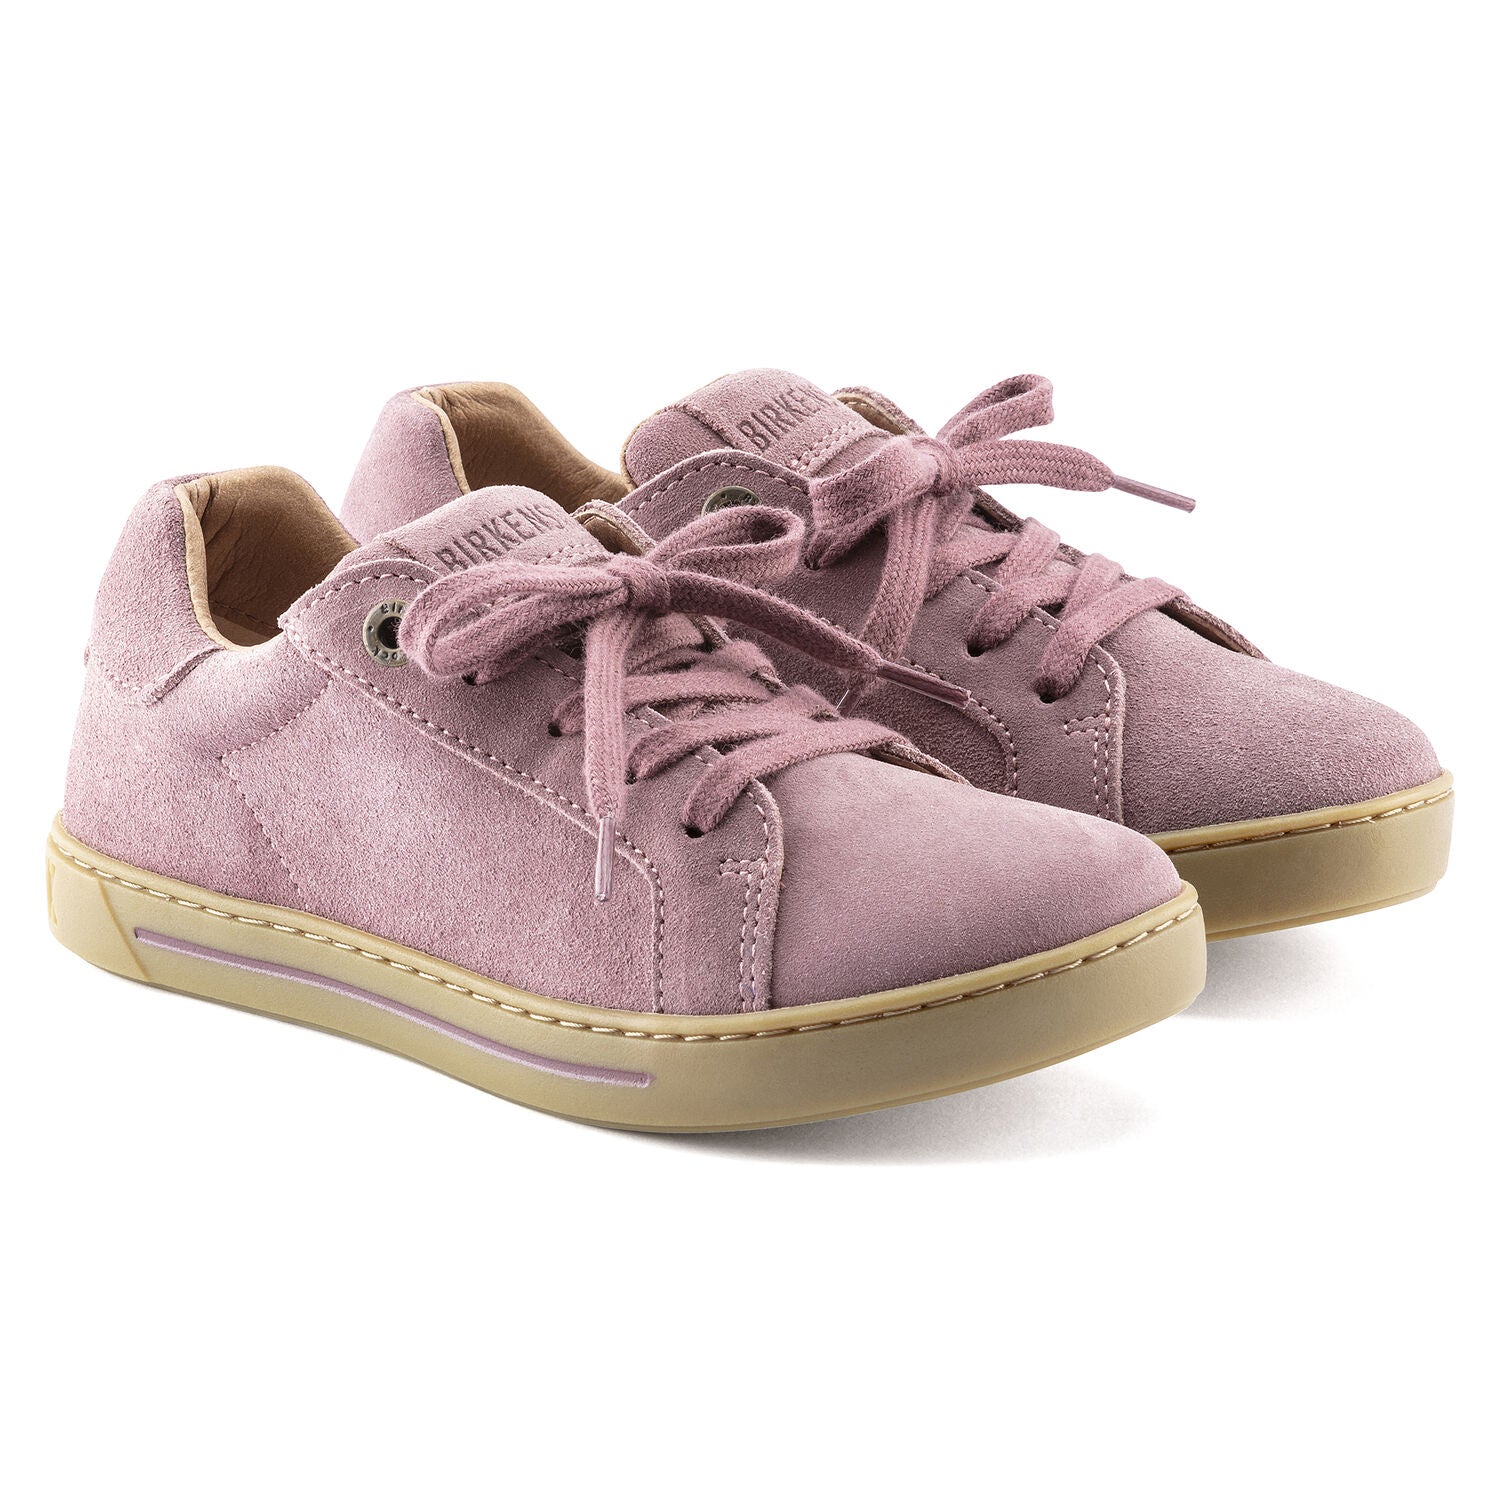 Kids Porto Suede Leather Sneaker - Lavender Blush